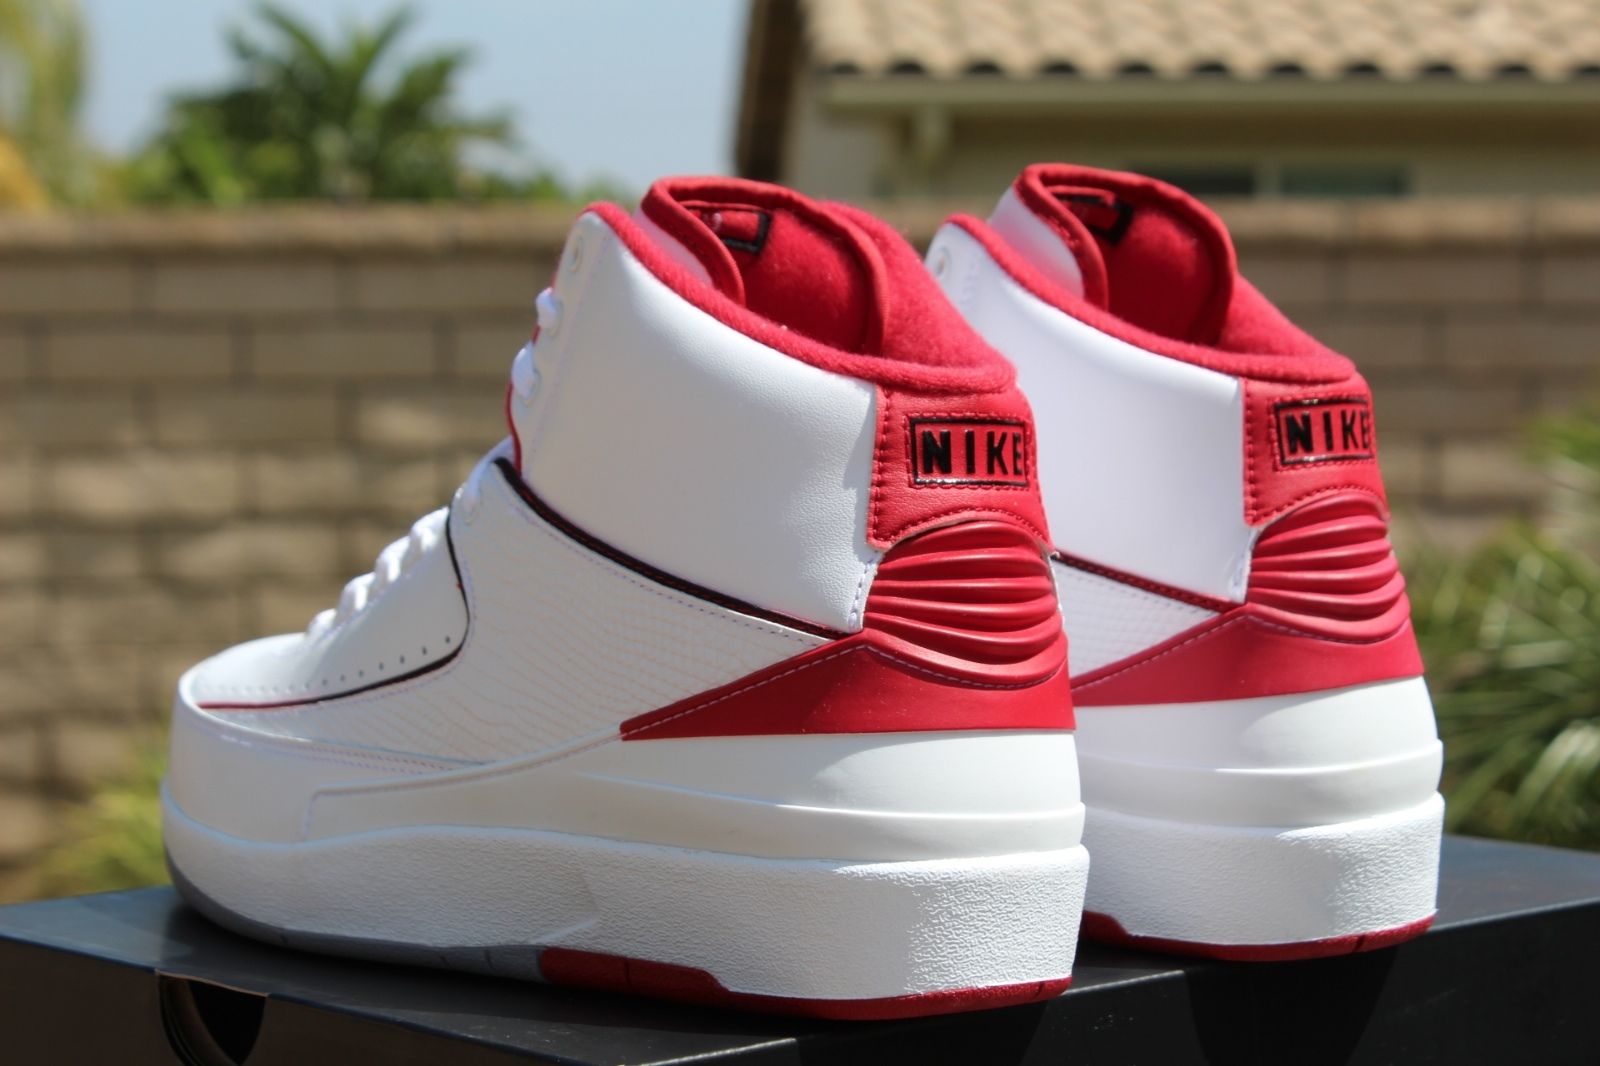 Air Jordan 2 Retro: White - Red - Available Early on eBay - Air Jordans